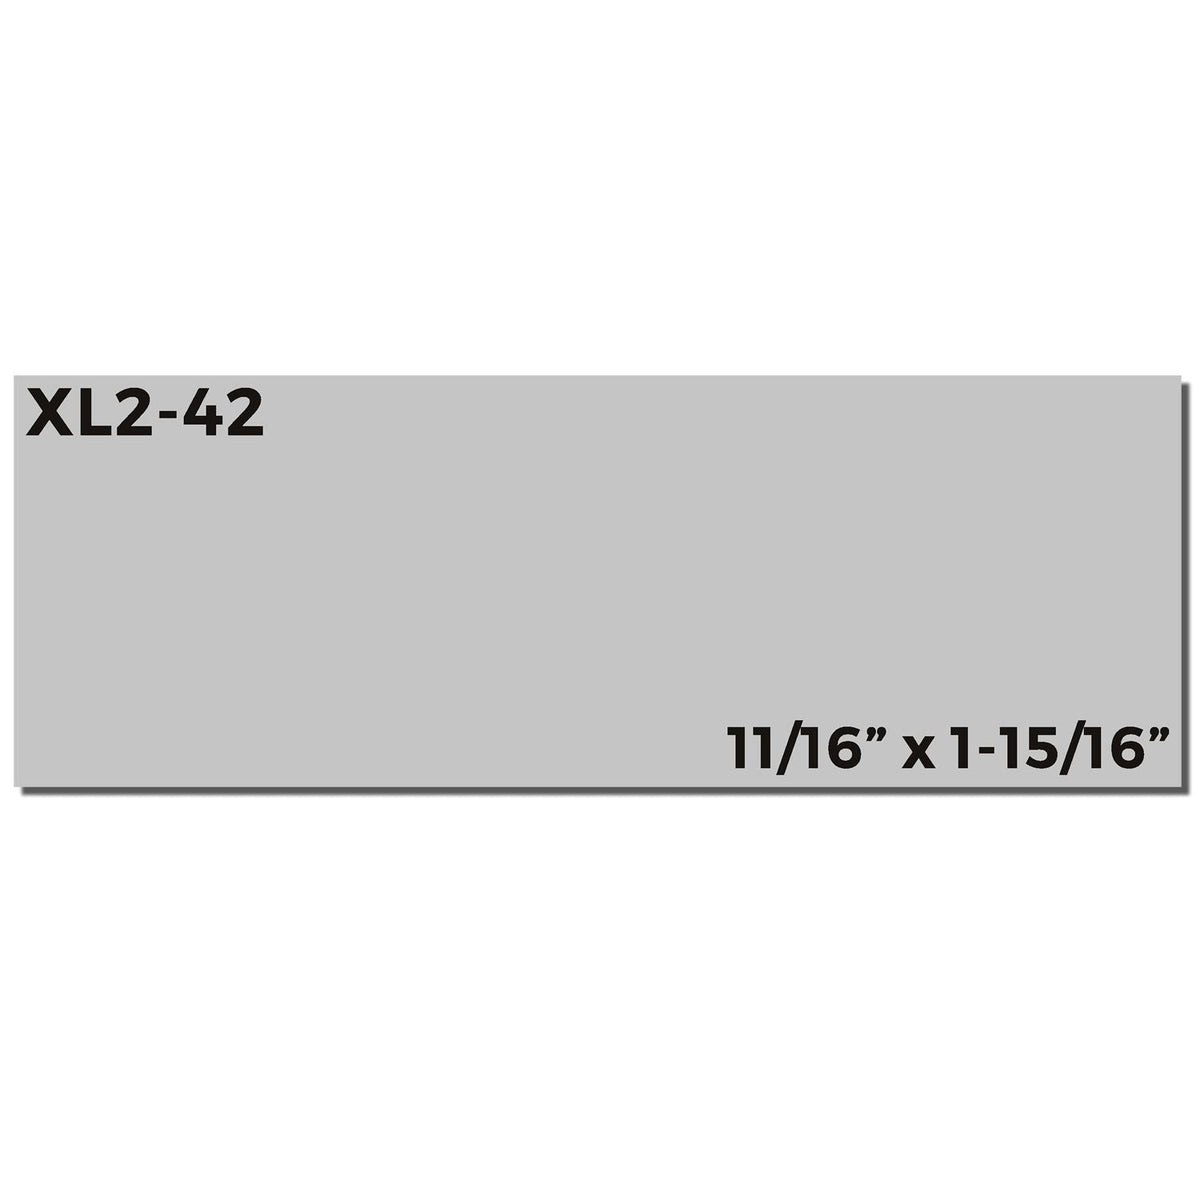 Maxlight Xl2 42 Pre Inked Stamp 11 16 X 1 15 16 Imprint Sample